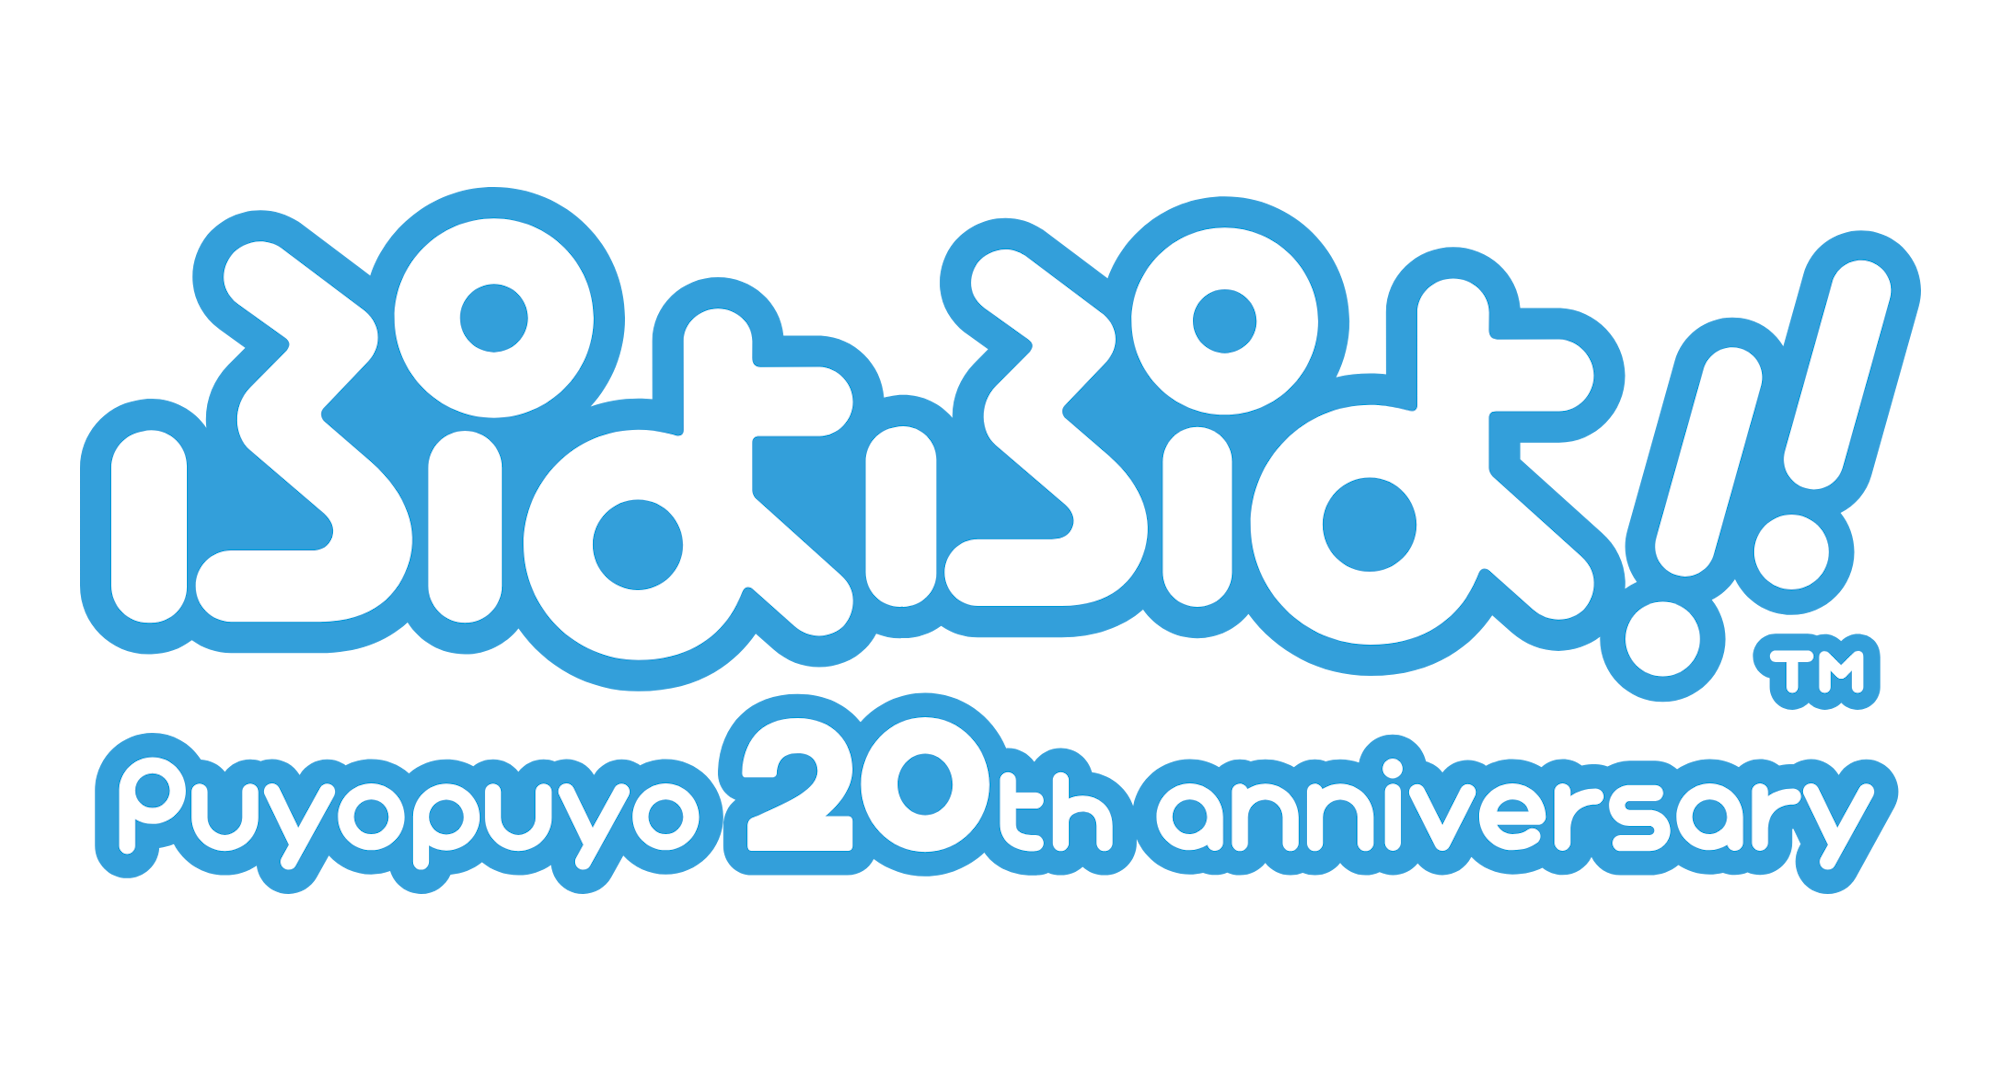 Puyo Puyo!! 20th Anniversary Logo